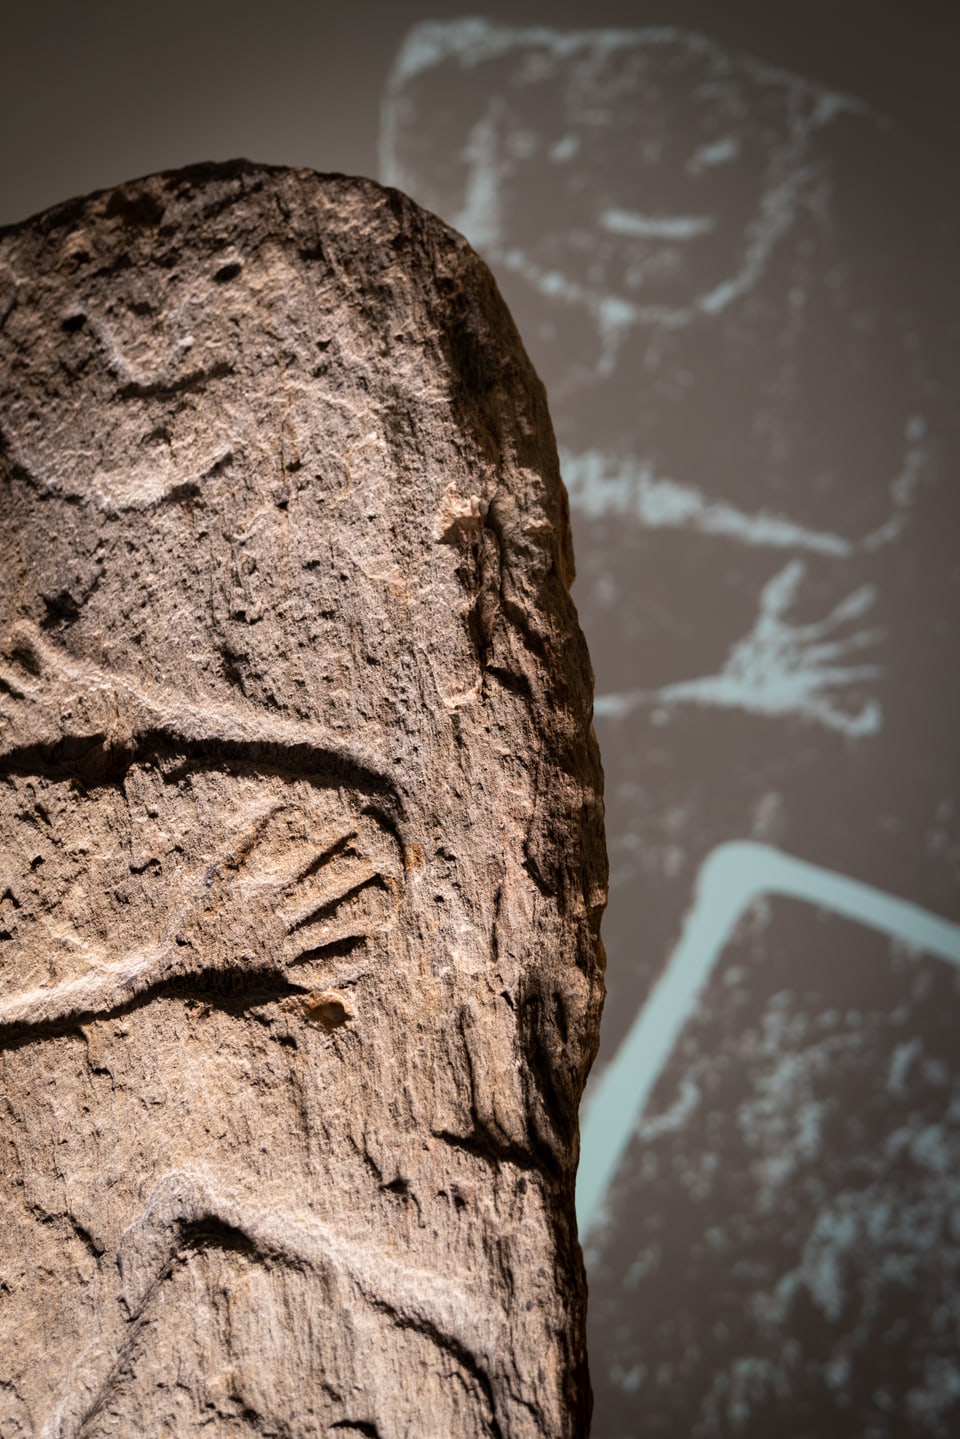 Stela probablamain masculina cun fatscha rienta, figura arcaica, stilisada cun bratscha, mauns ed ina cuntgadella. 